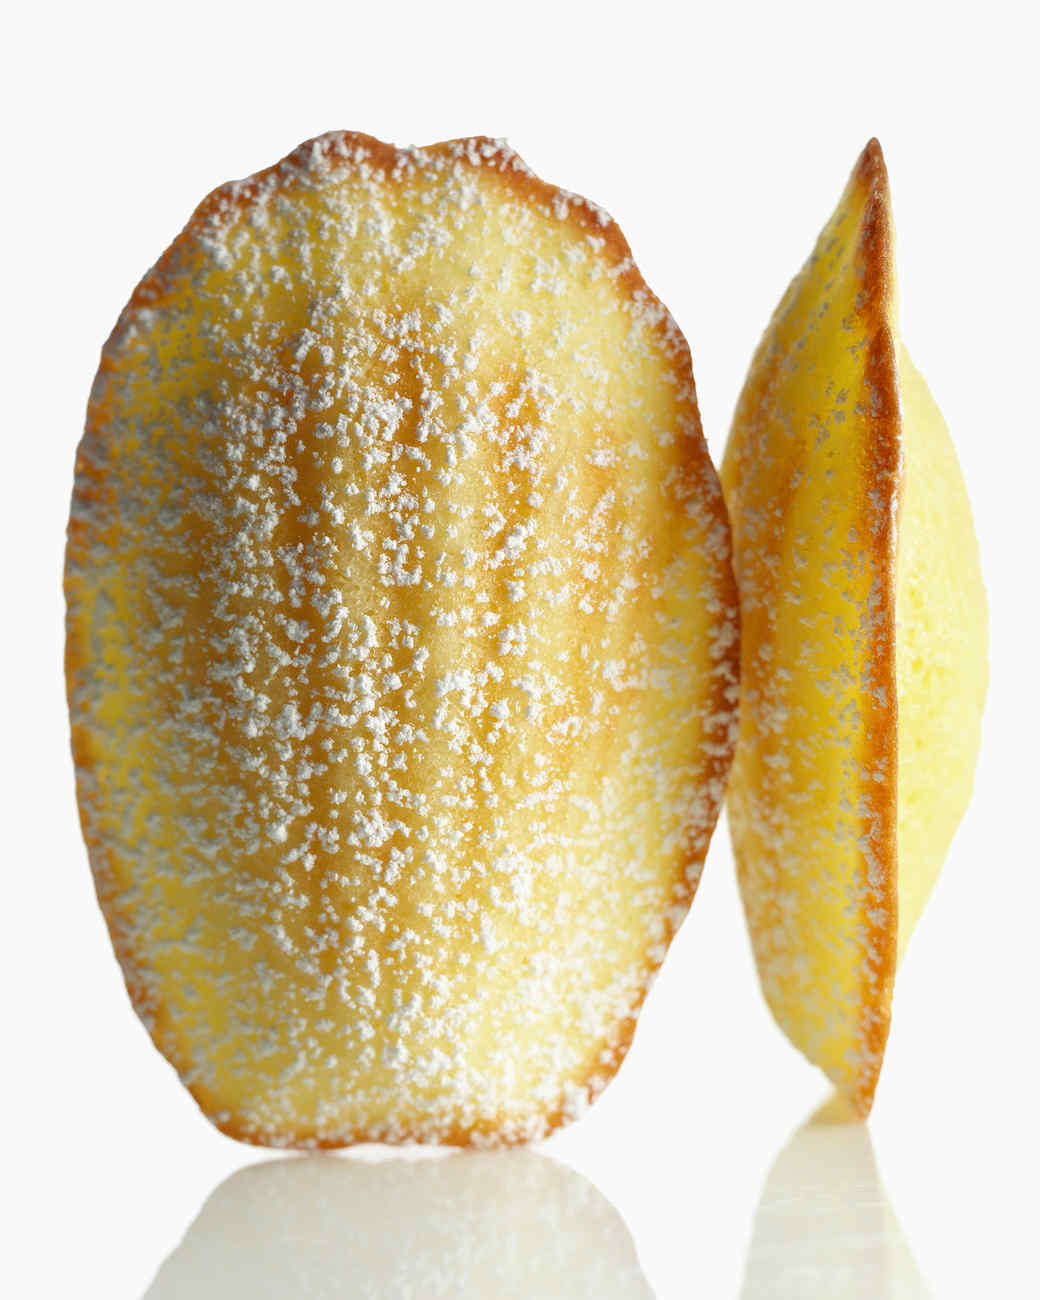 Lemon Madeleines